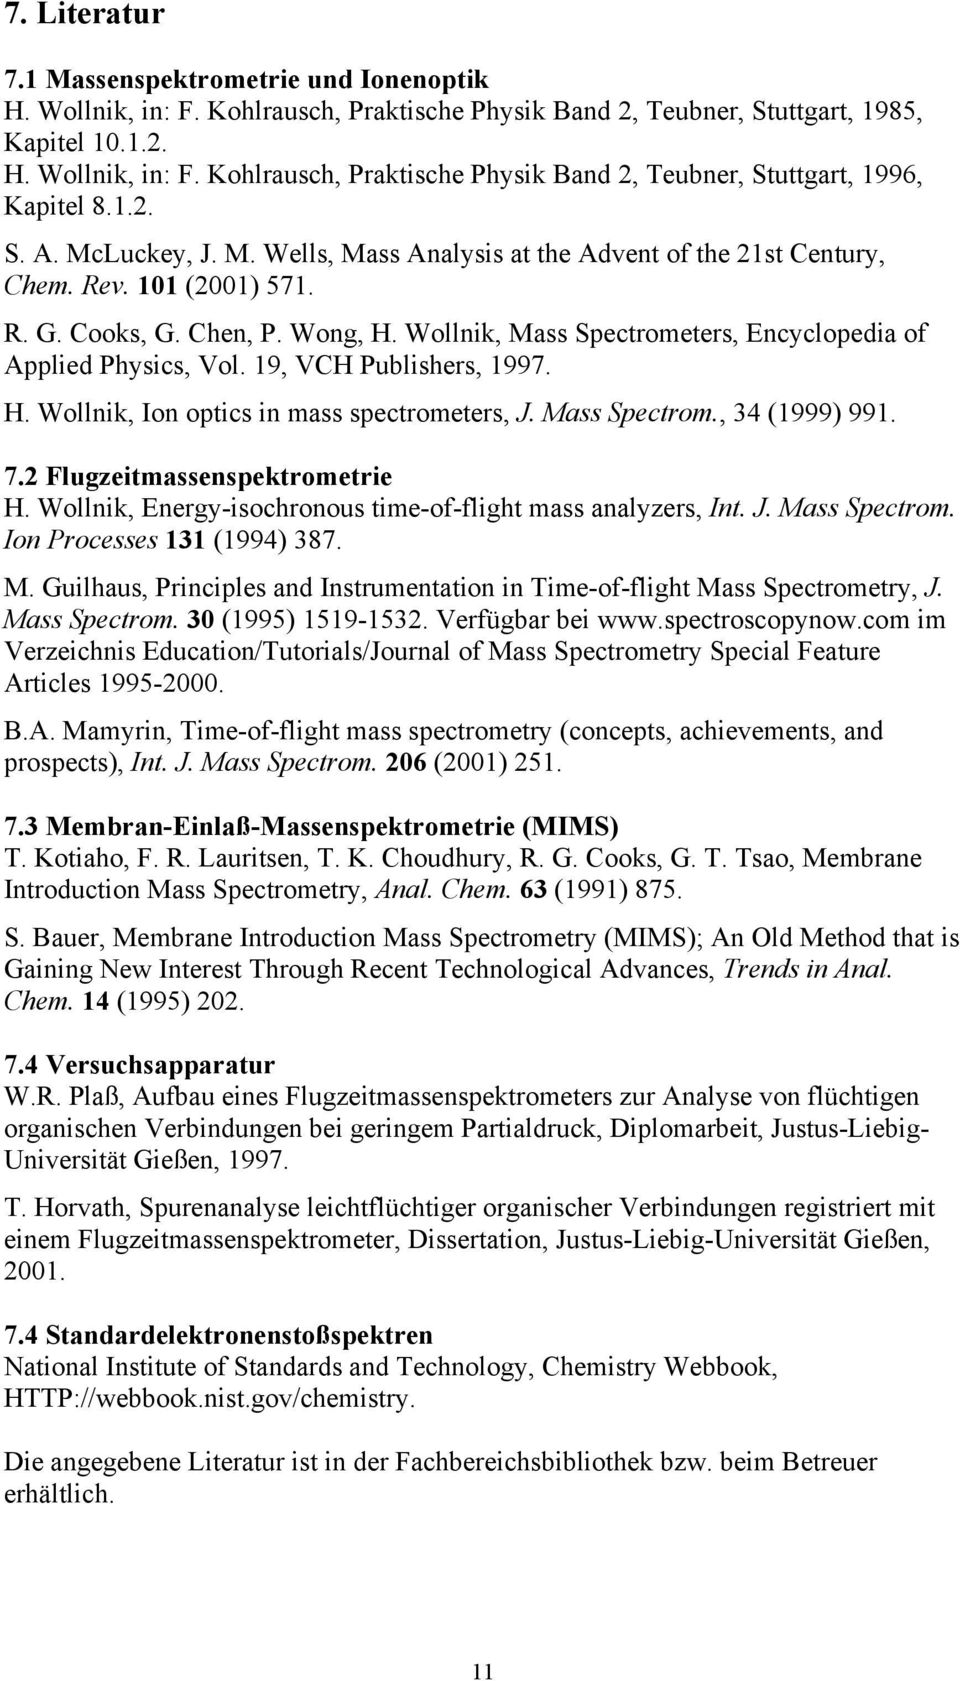 Wollnik, Mass Spectrometers, Encyclopedia of Applied Physics, Vol. 19, VCH Publishers, 1997. H. Wollnik, Ion optics in mass spectrometers, J. Mass Spectrom., 34 (1999) 991. 7.